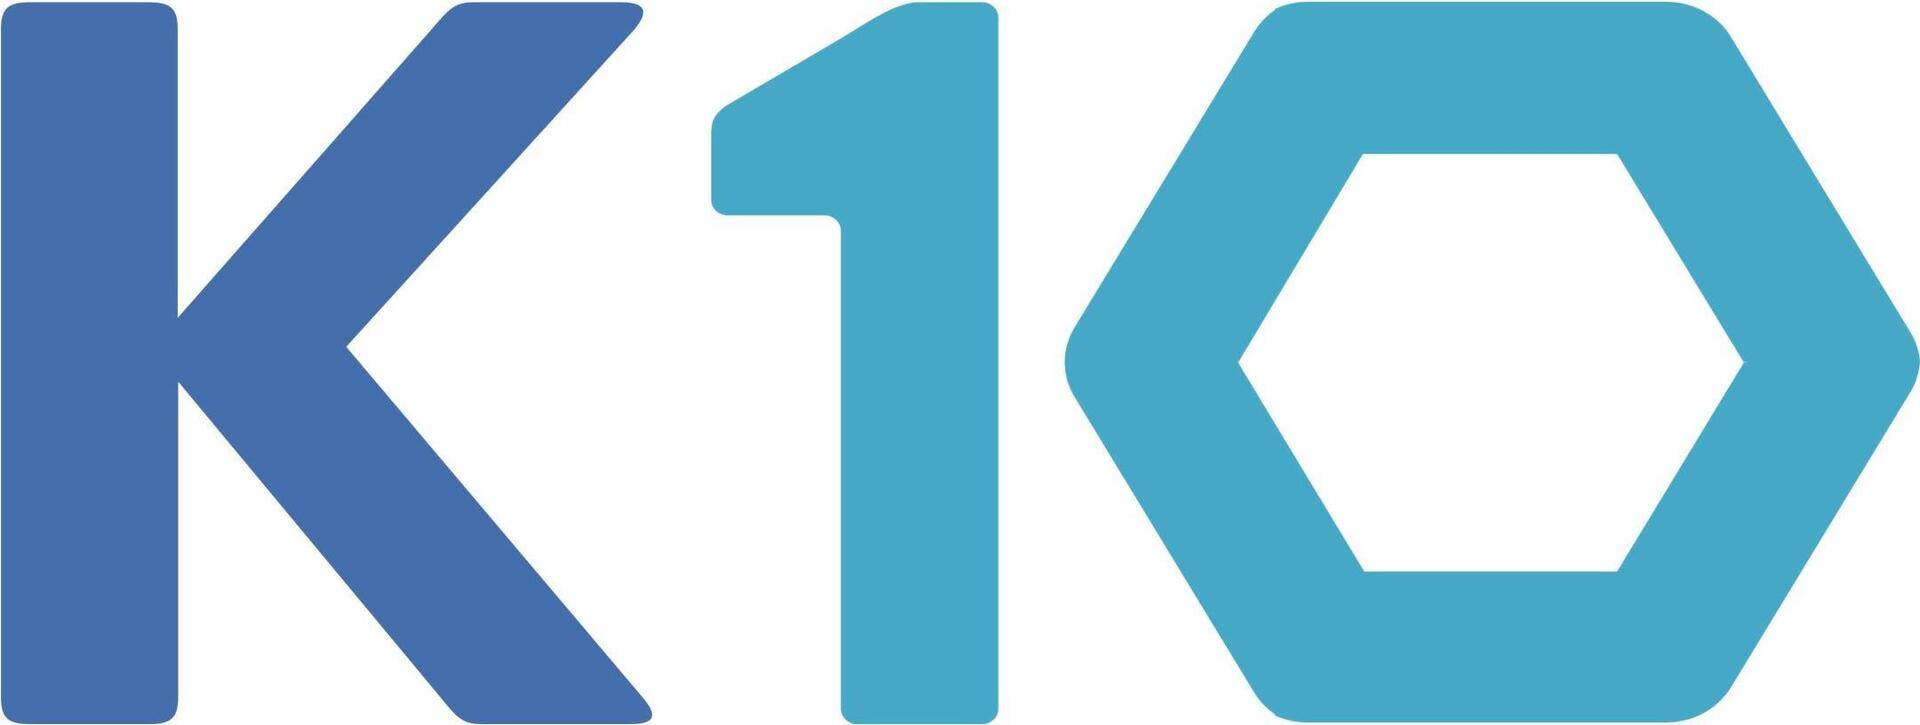 Veeam 2nd year Payment for Kubernetes Backup and DR with Kasten by Veeam. Kasten K10 Enterprise Platform. 3 Years Subscription Annual Billing & Kasten Basic Support. Public Sector. (P-K10ENT-0N-SA3P2-00) von Veeam